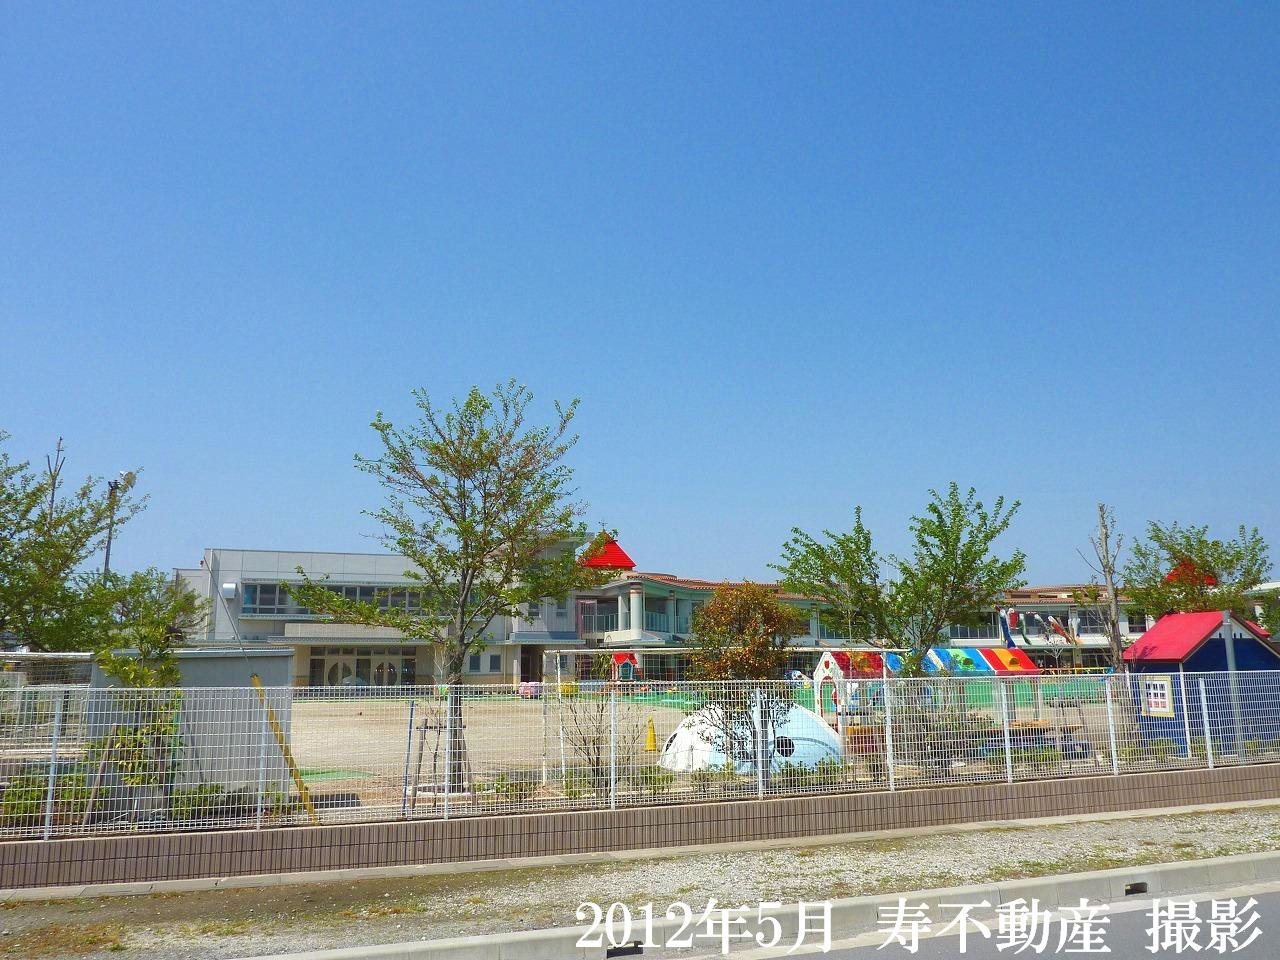 kindergarten ・ Nursery. School corporation platinum Gakuen platinum kindergarten (kindergarten ・ 187m to the nursery)